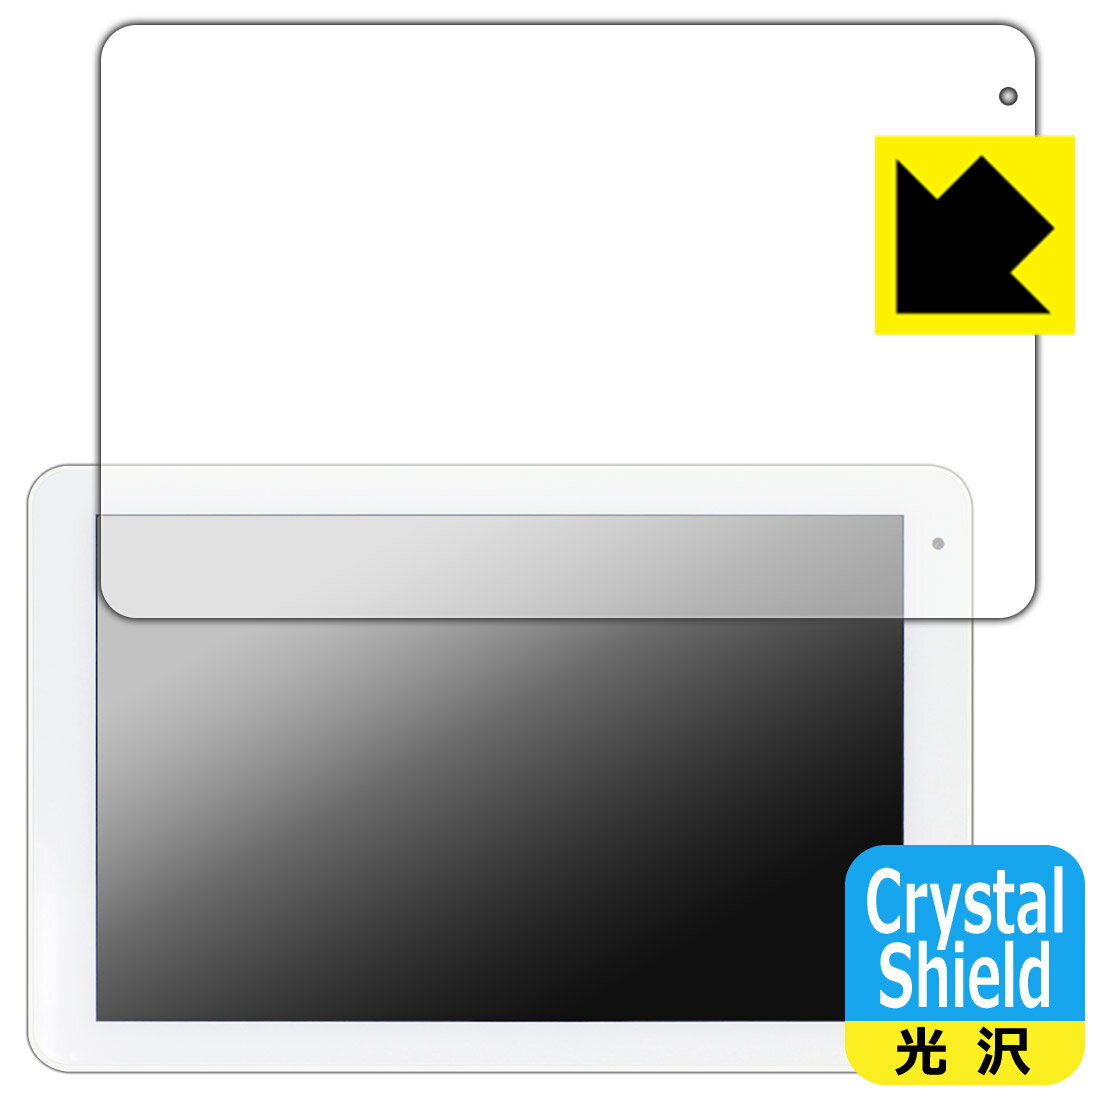 Crystal Shield コミュファ光 10.1インチ タブレット AT-10 日本製 自社製造直販